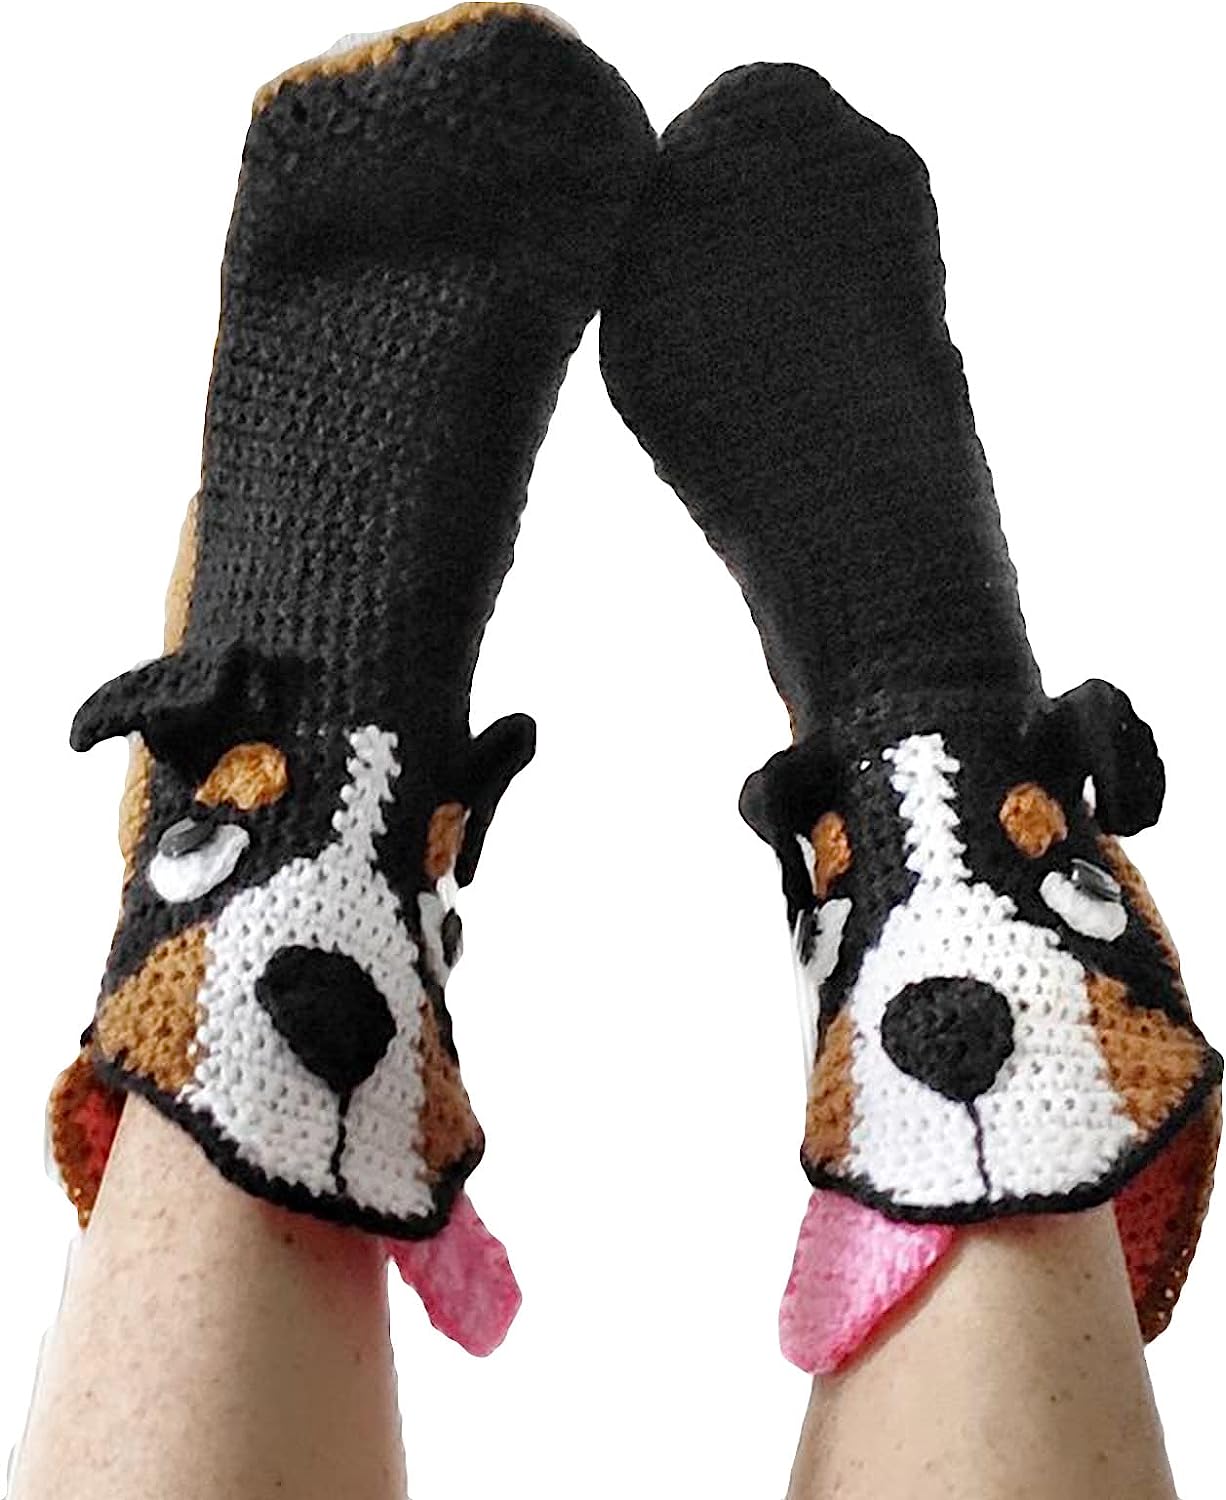 THATLILSHOP One Size / Dog Black Women Men Novelty Animal Pattern Socks Crazy Funny Knit Crocodile Socks Funny Gifts